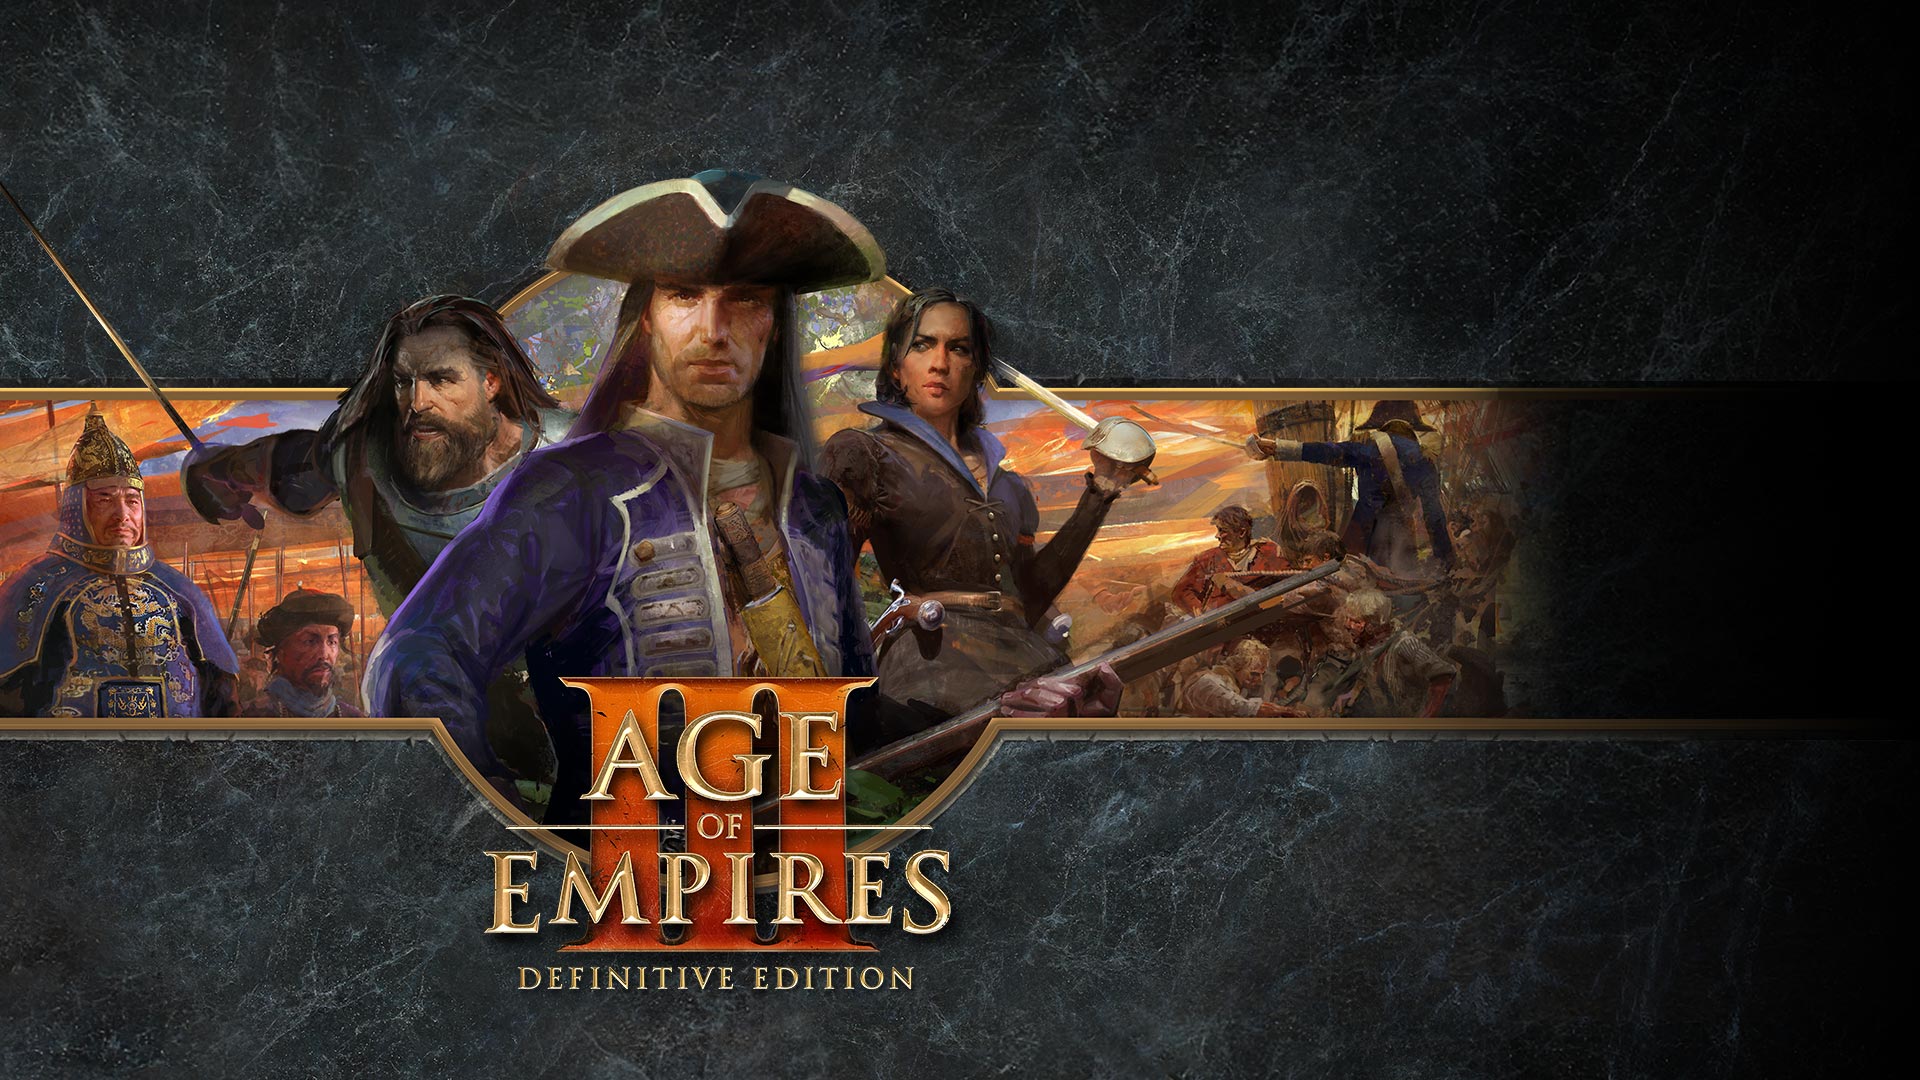 Age of Empires III: Definitive Edition, hahmot poseeraavat